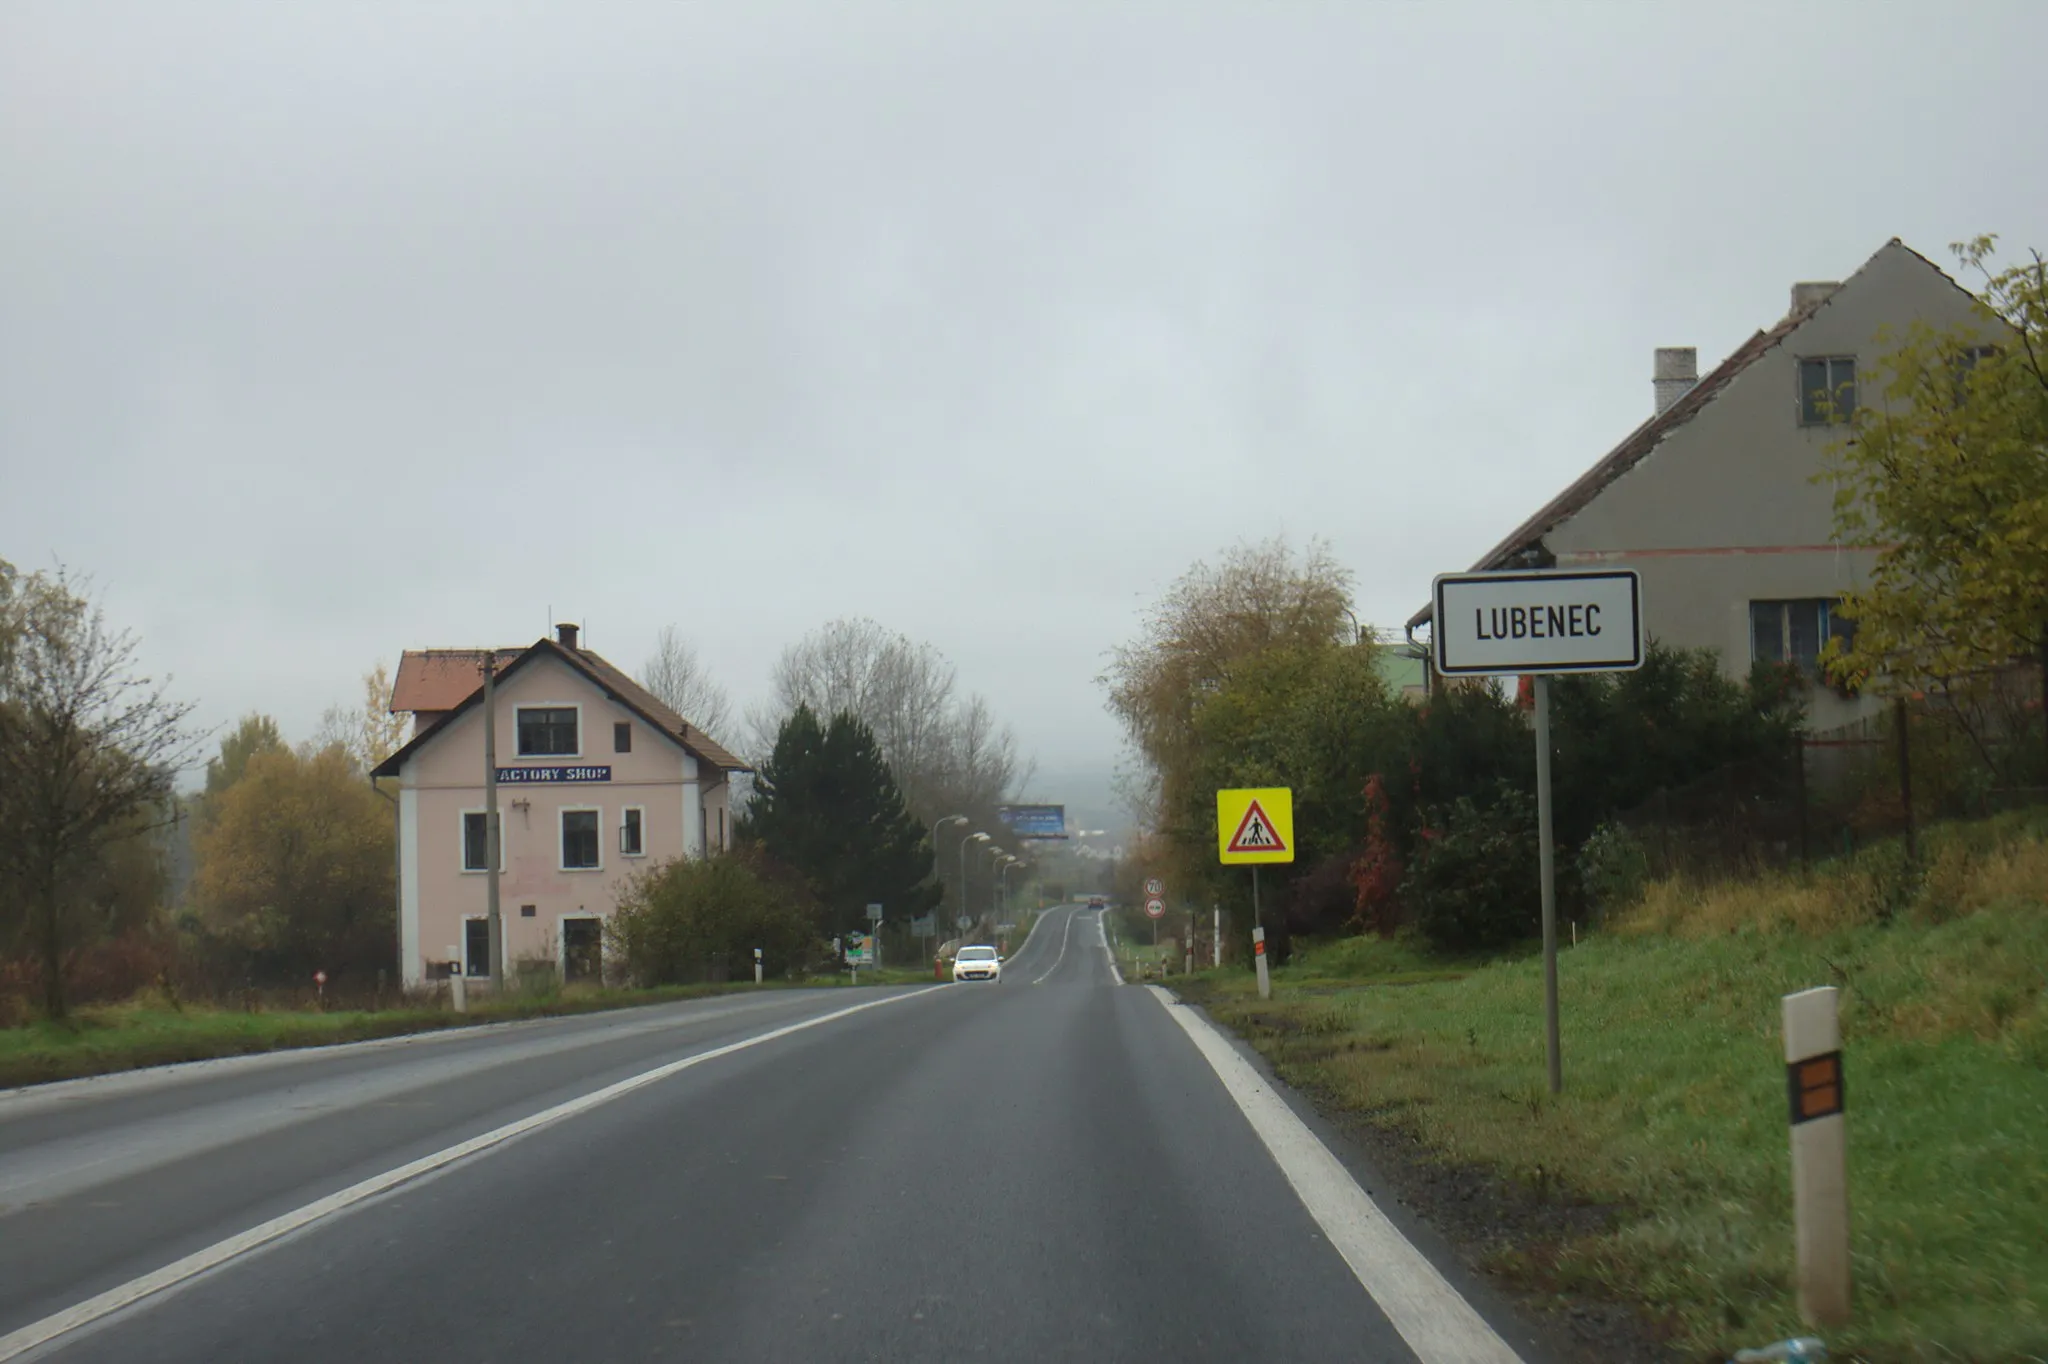 Photo showing: I/6 road passing through Lubenec, Ústí Region, CZ